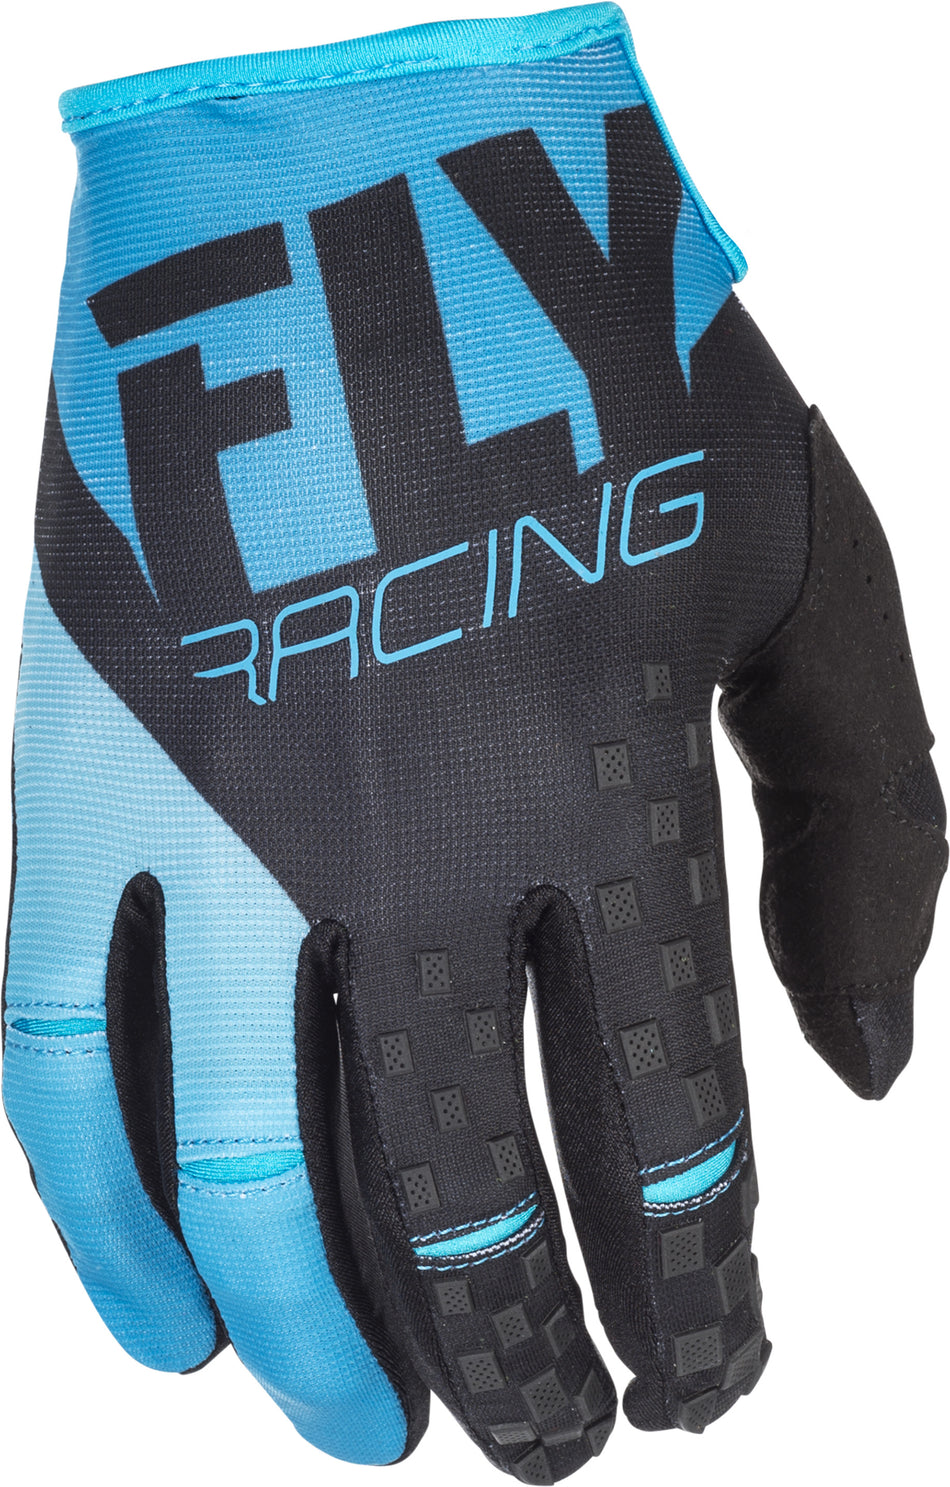 FLY RACING Kinetic Gloves Blue/Black Sz 13 371-41113